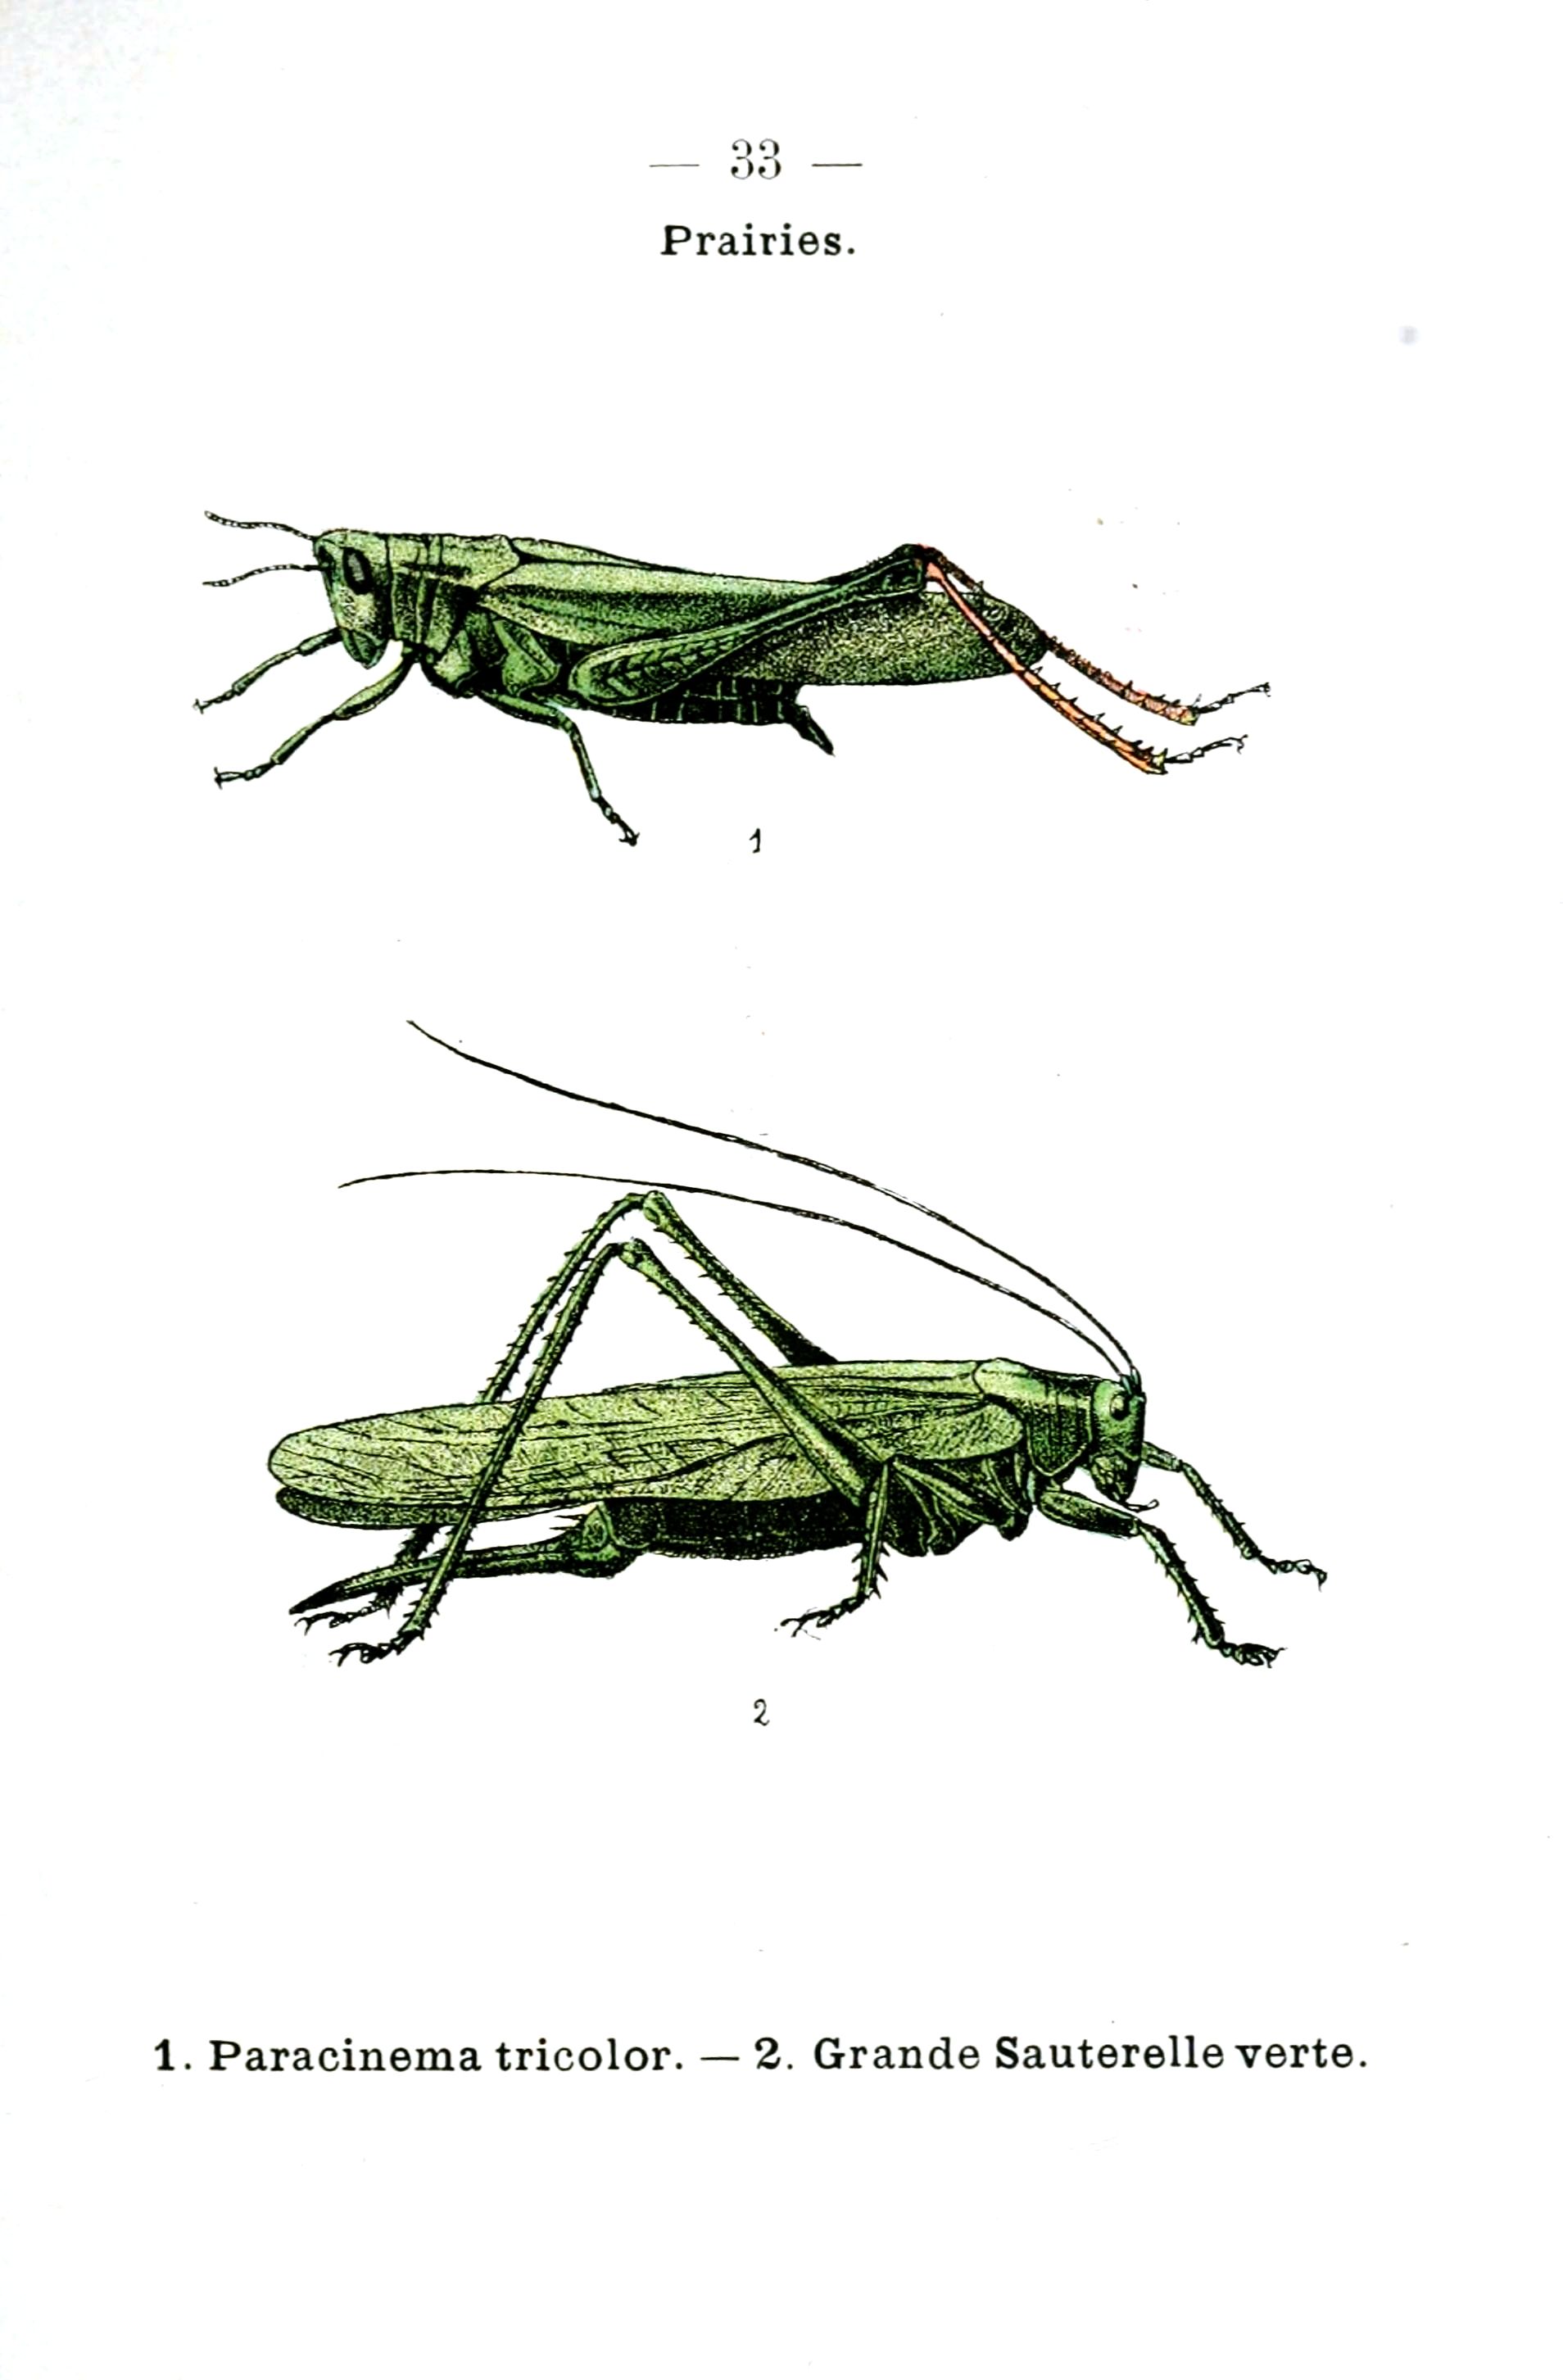 Grasshopper clipart pixel art. Vintage botanical prints google